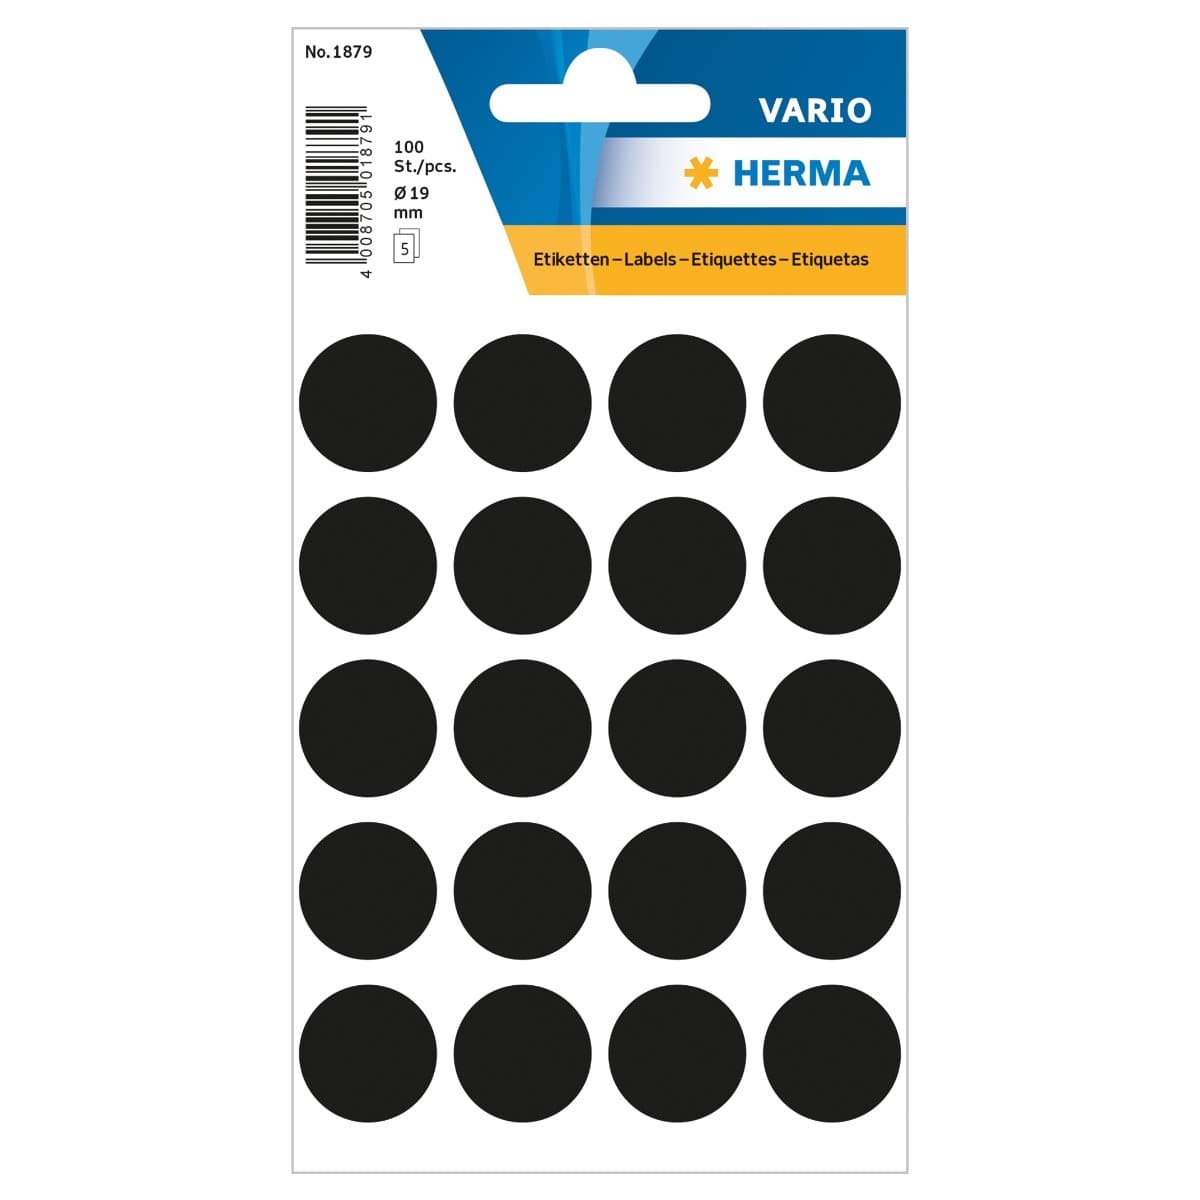 Herma Vario Sticker Color Dots, 19 mm, 100/pack, Black